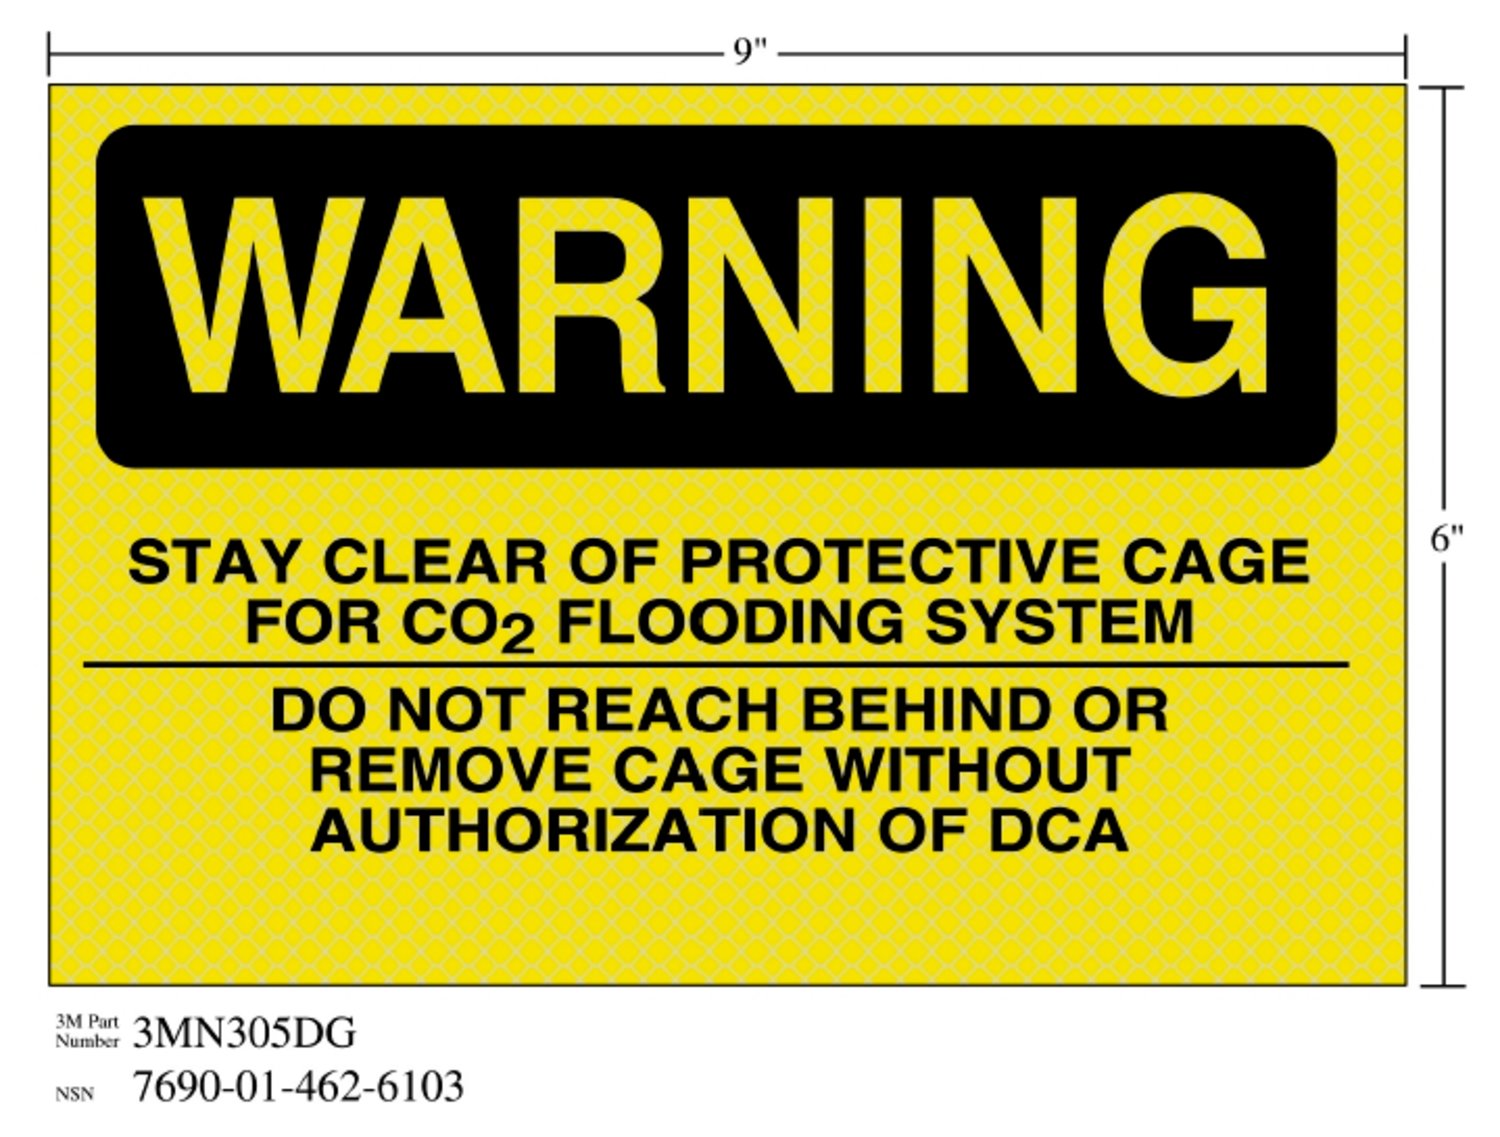 7010343555 - 3M Diamond Grade Fire Fighting Sign 3MN305DG, "WARNING…DCA", 9 in x 6
in, 10/Package